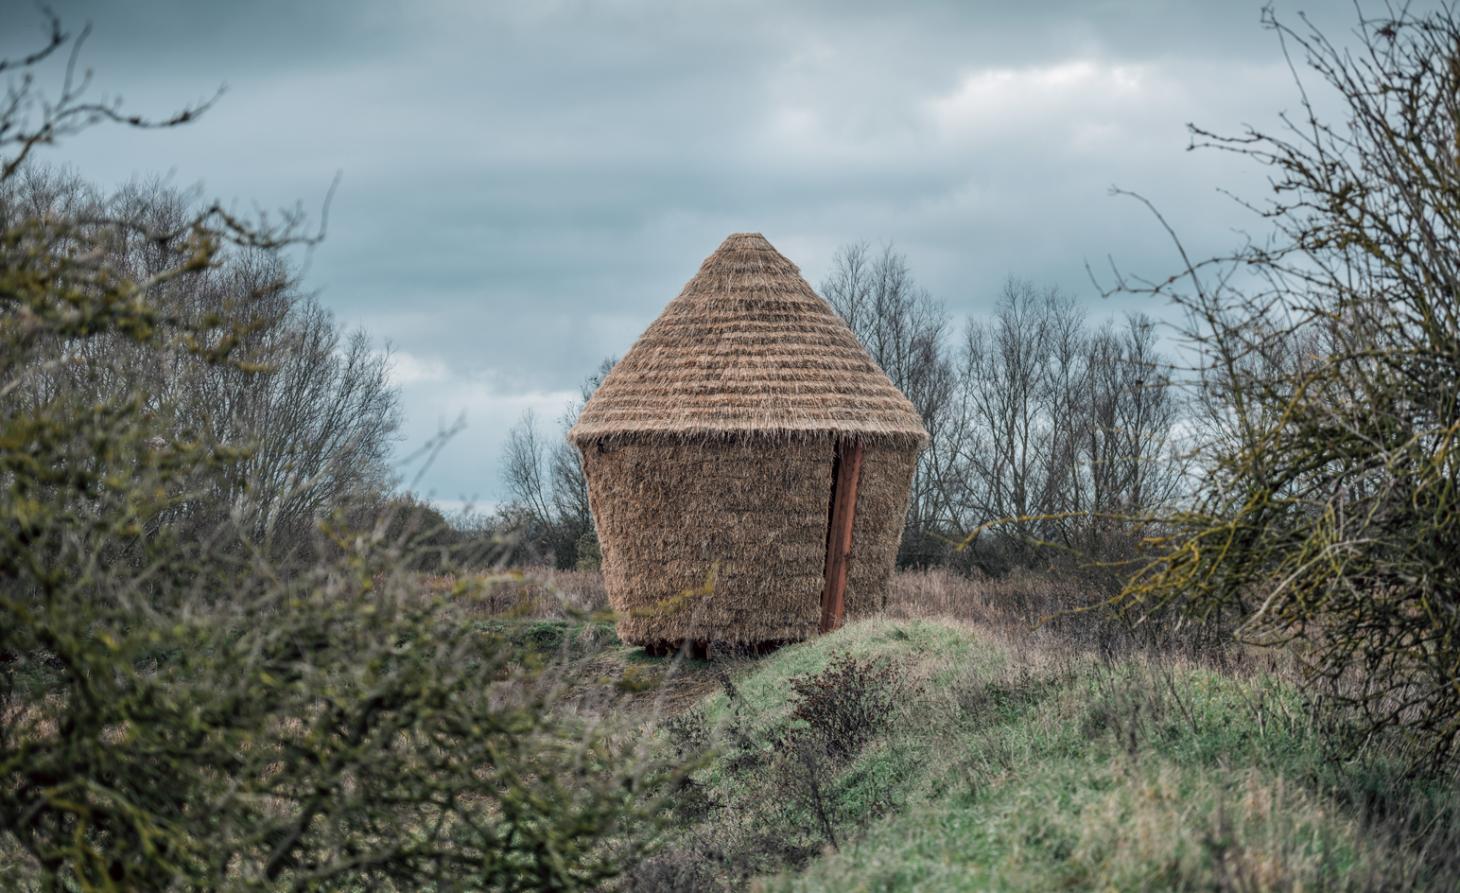 Studio Morison builds a ‘spiritual’ sanctuary out of straw in Cambridgeshire